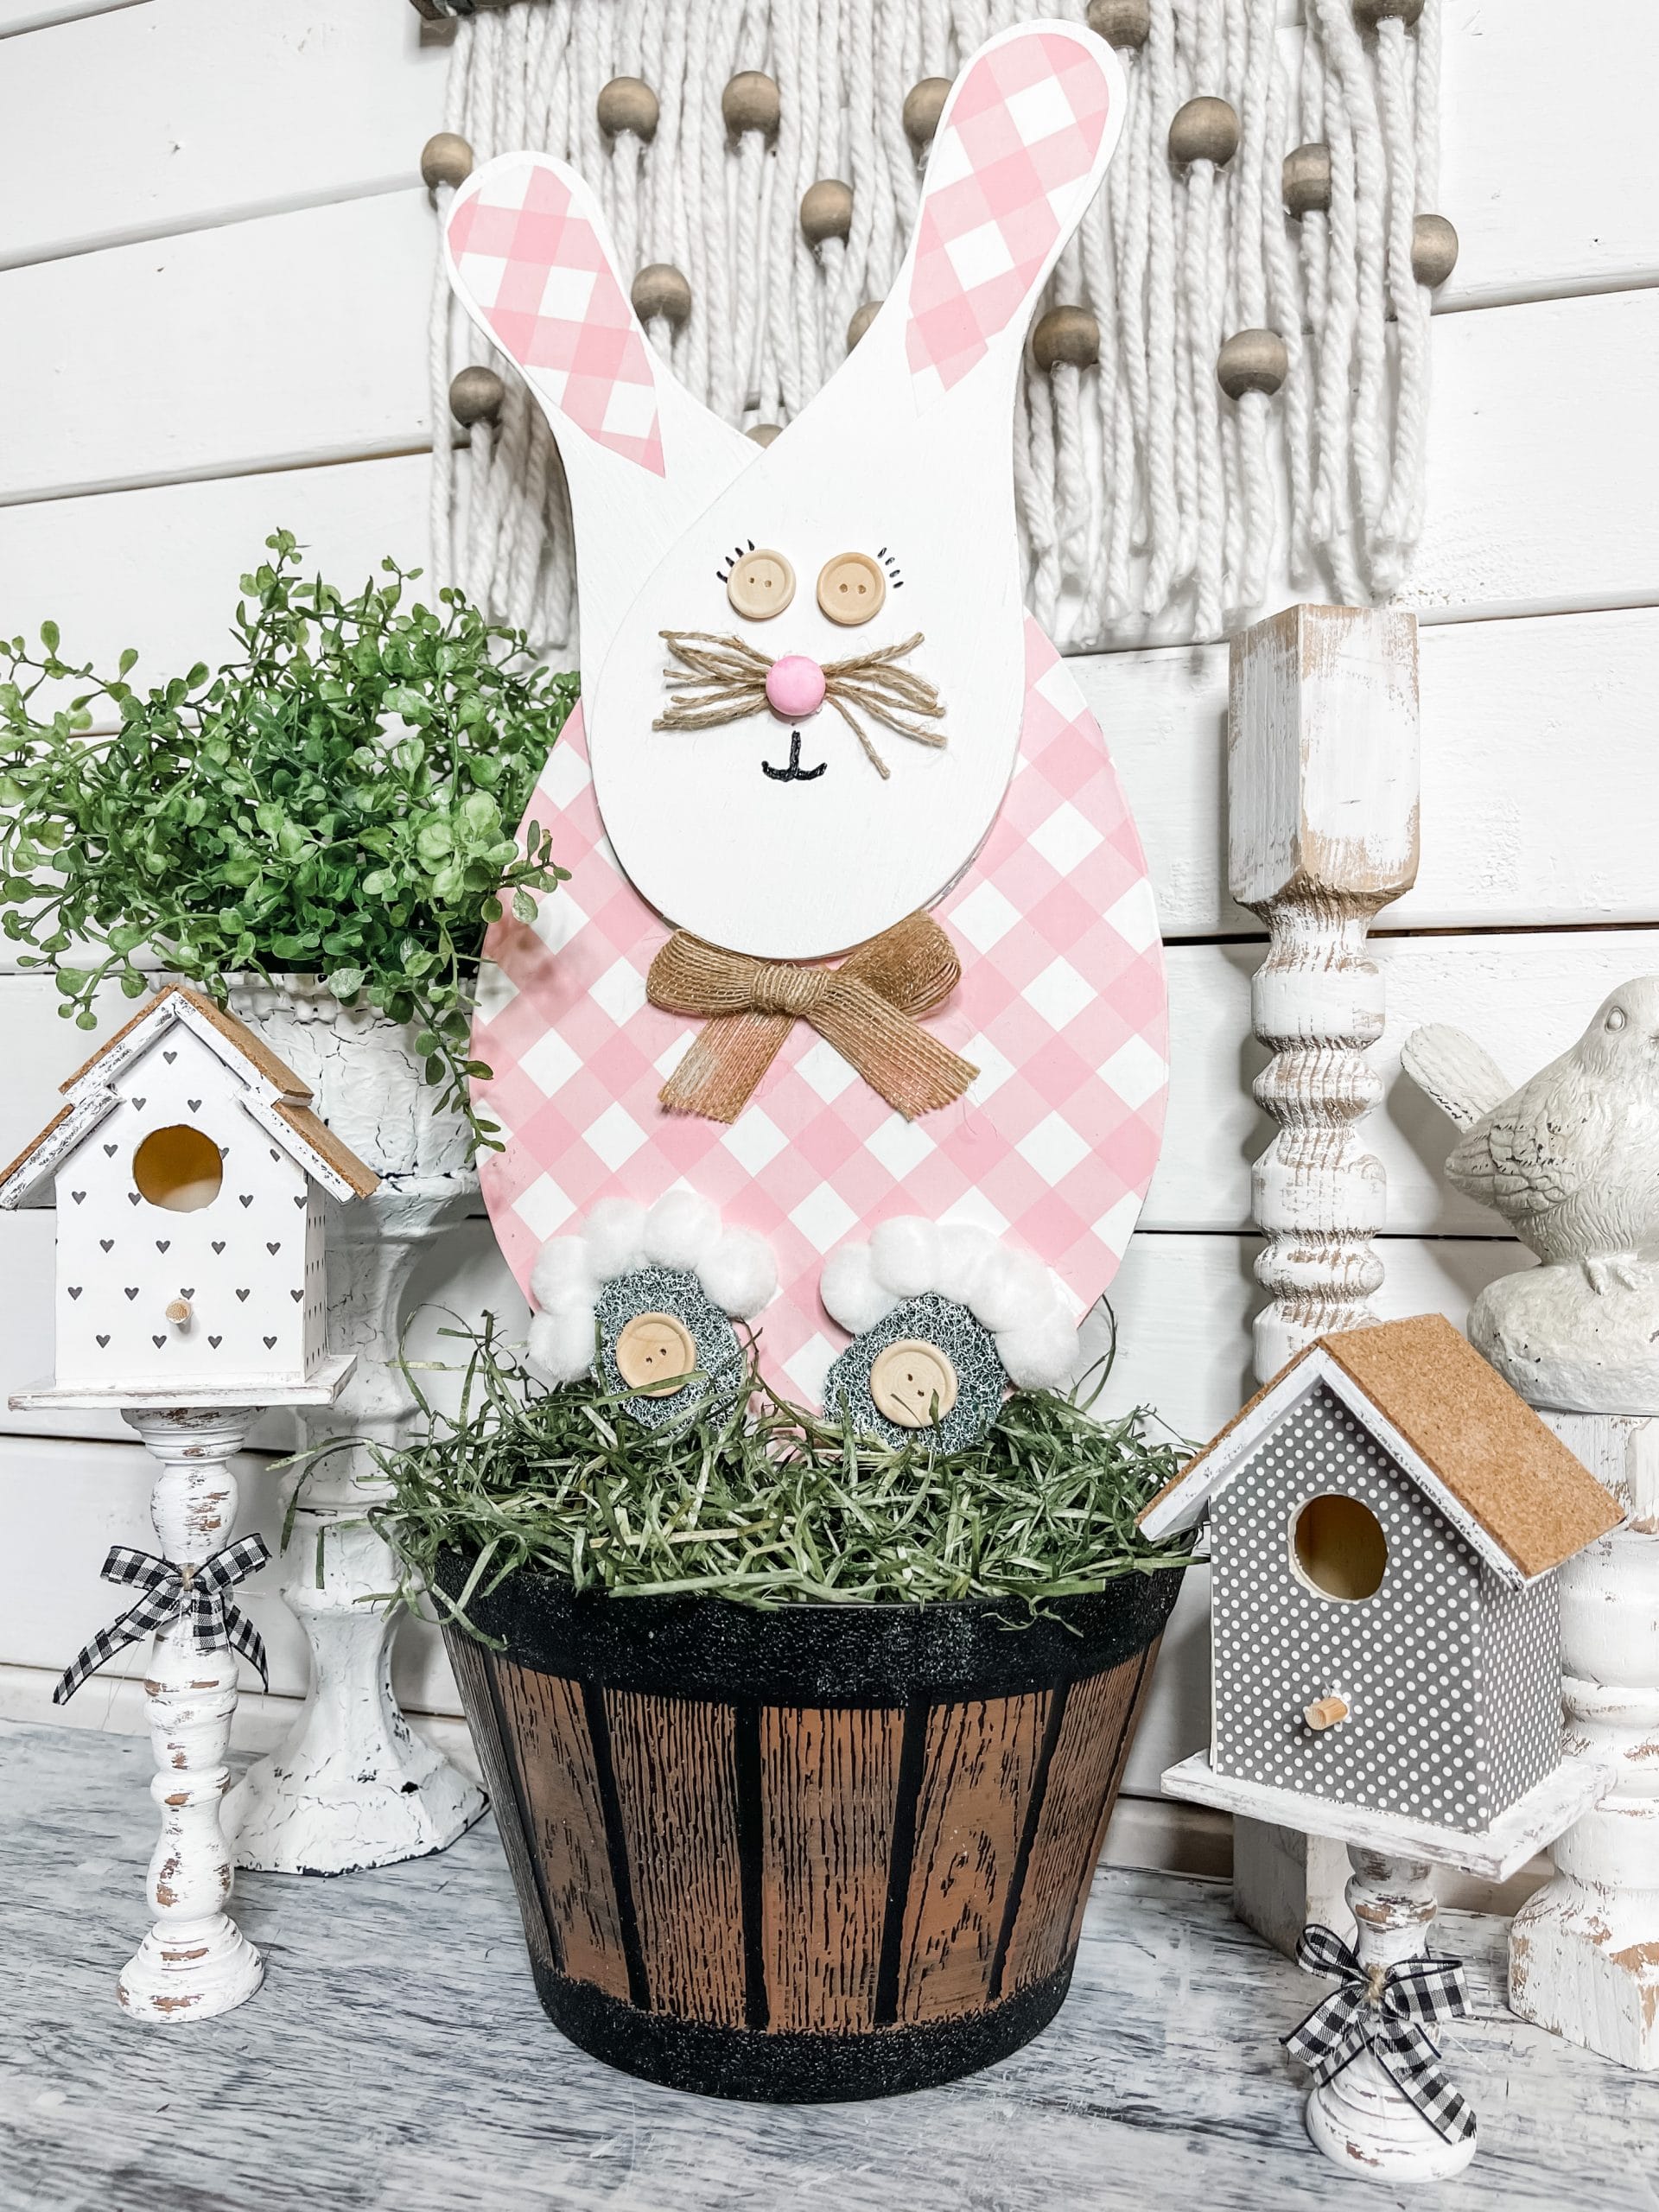 PRIMITIVE WOOD SIGN~"EASTER"~Rabbit/Bunny/Flower Shelf Sitter Wall Hanging Jute